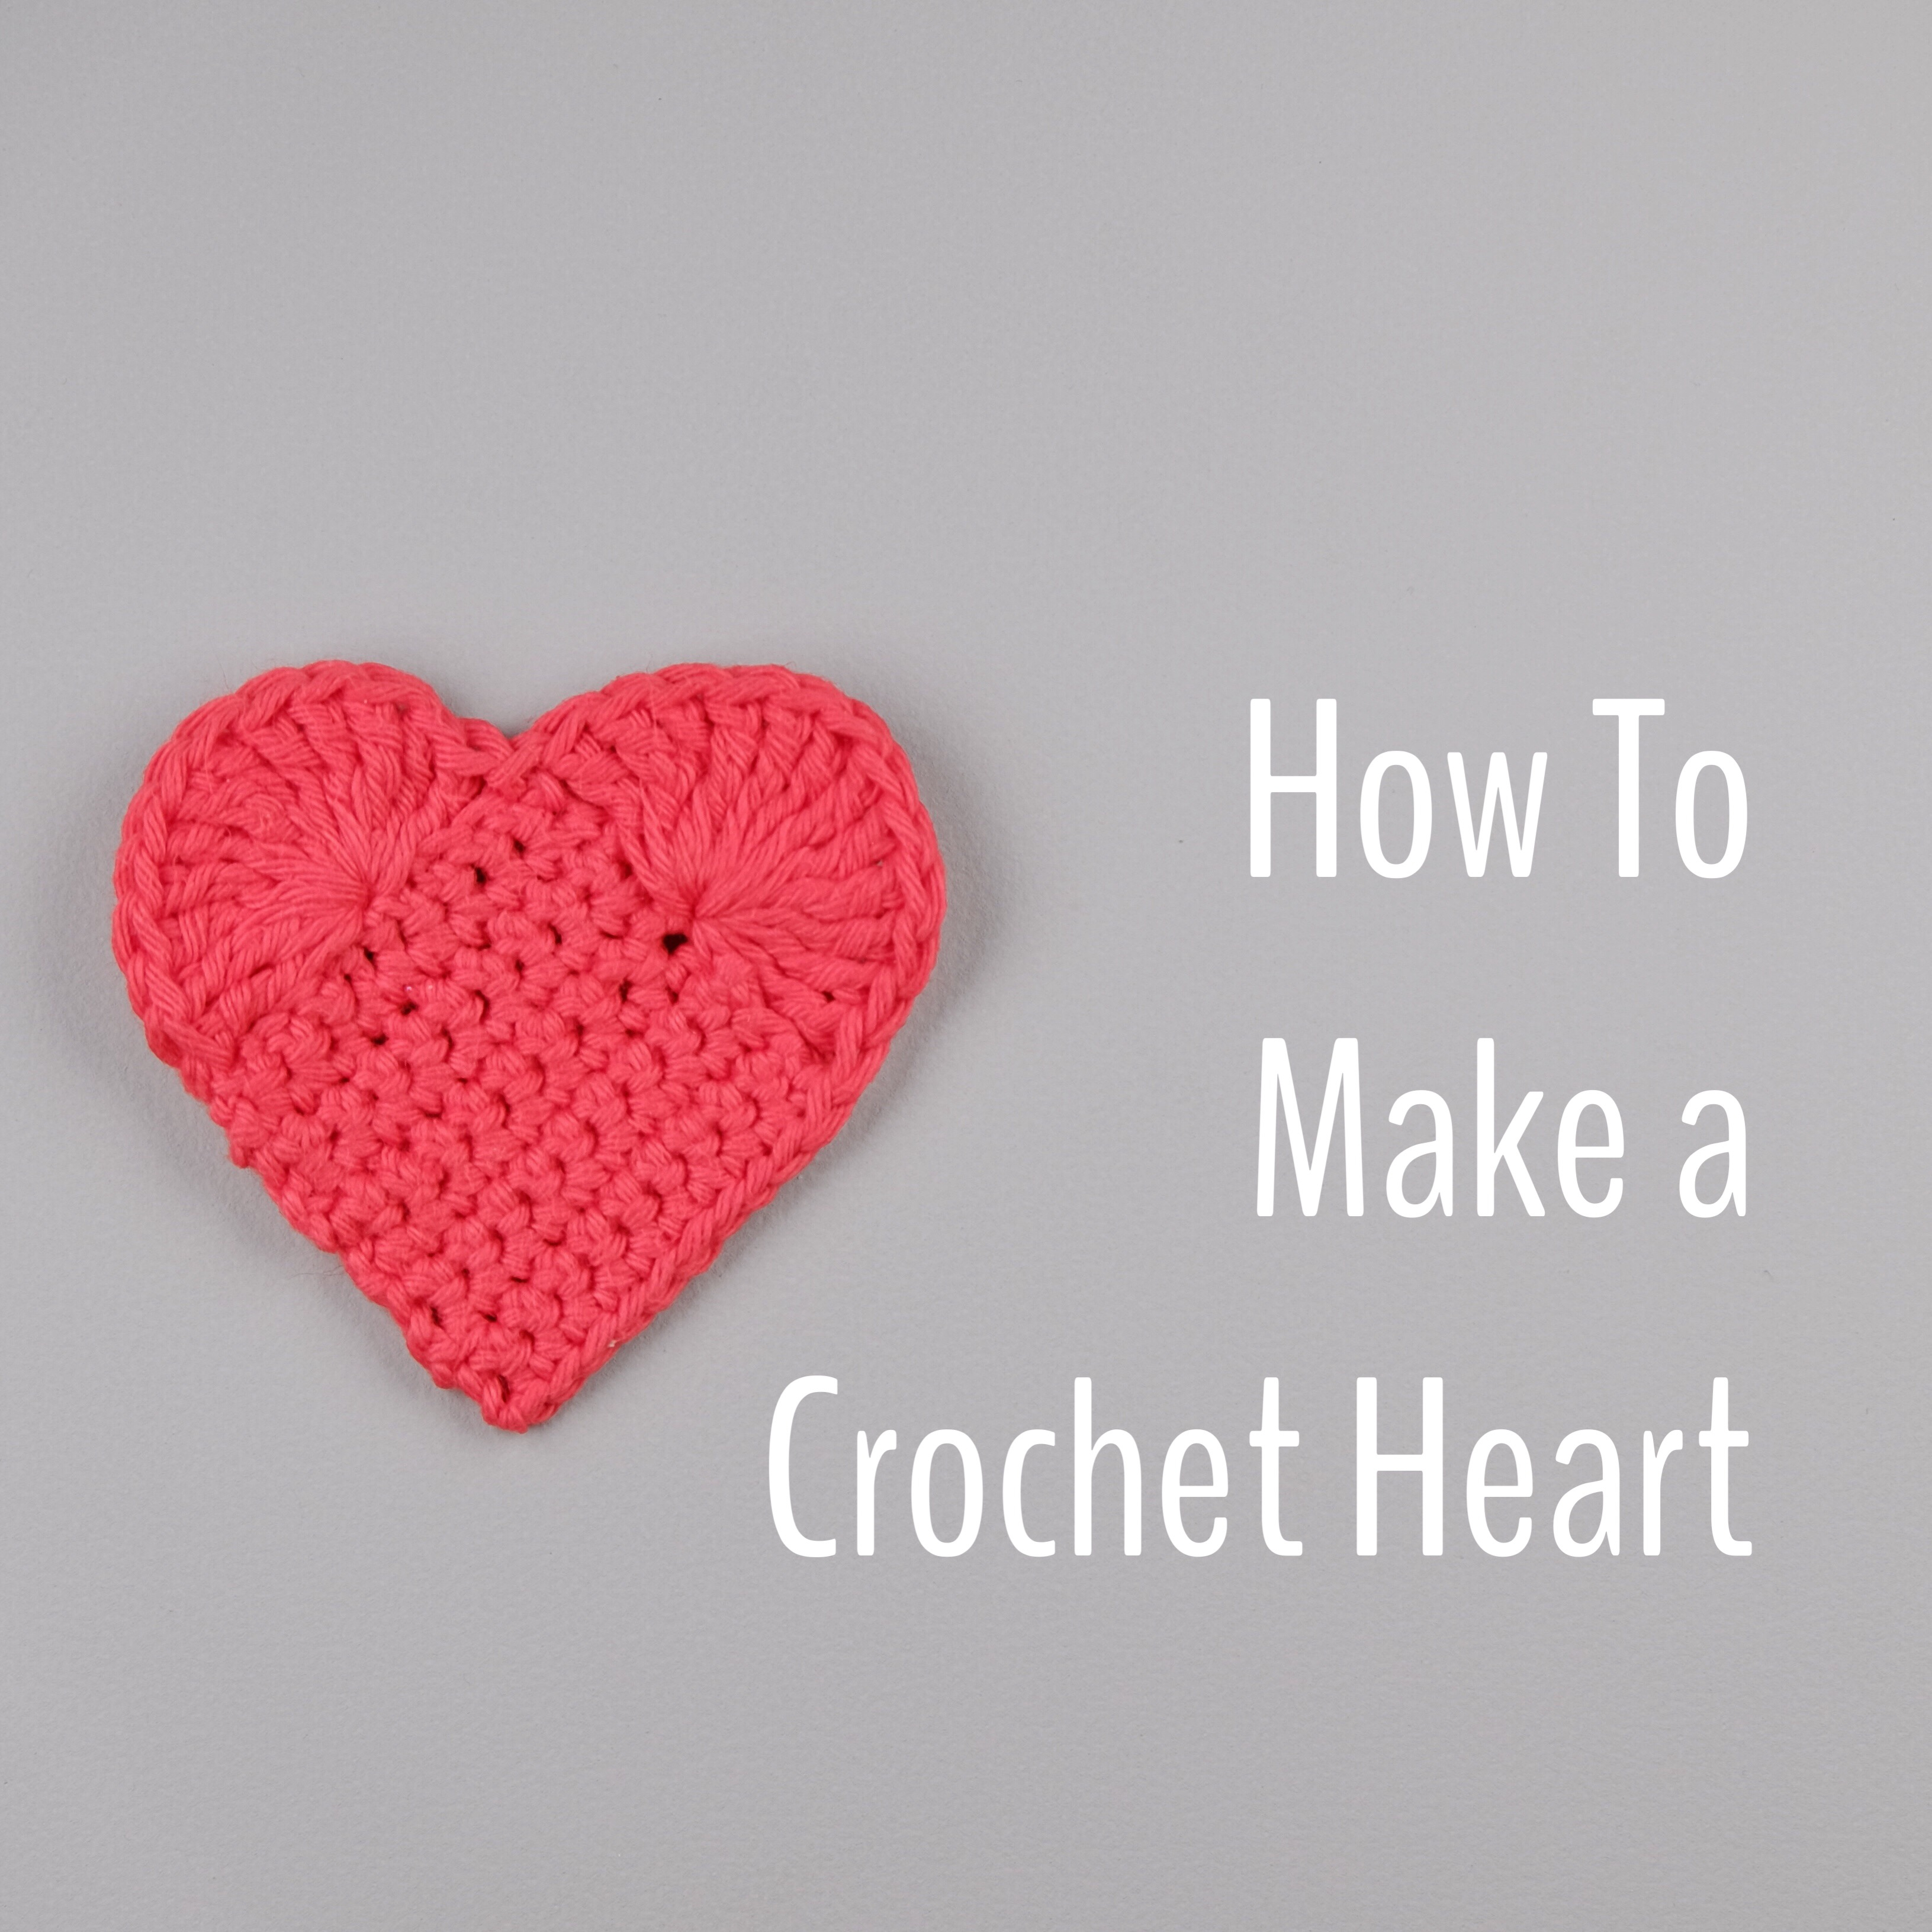 Crochet Heart Patterns Crochet Heart Pattern Quick And Easy Tutorial Crochet Coach